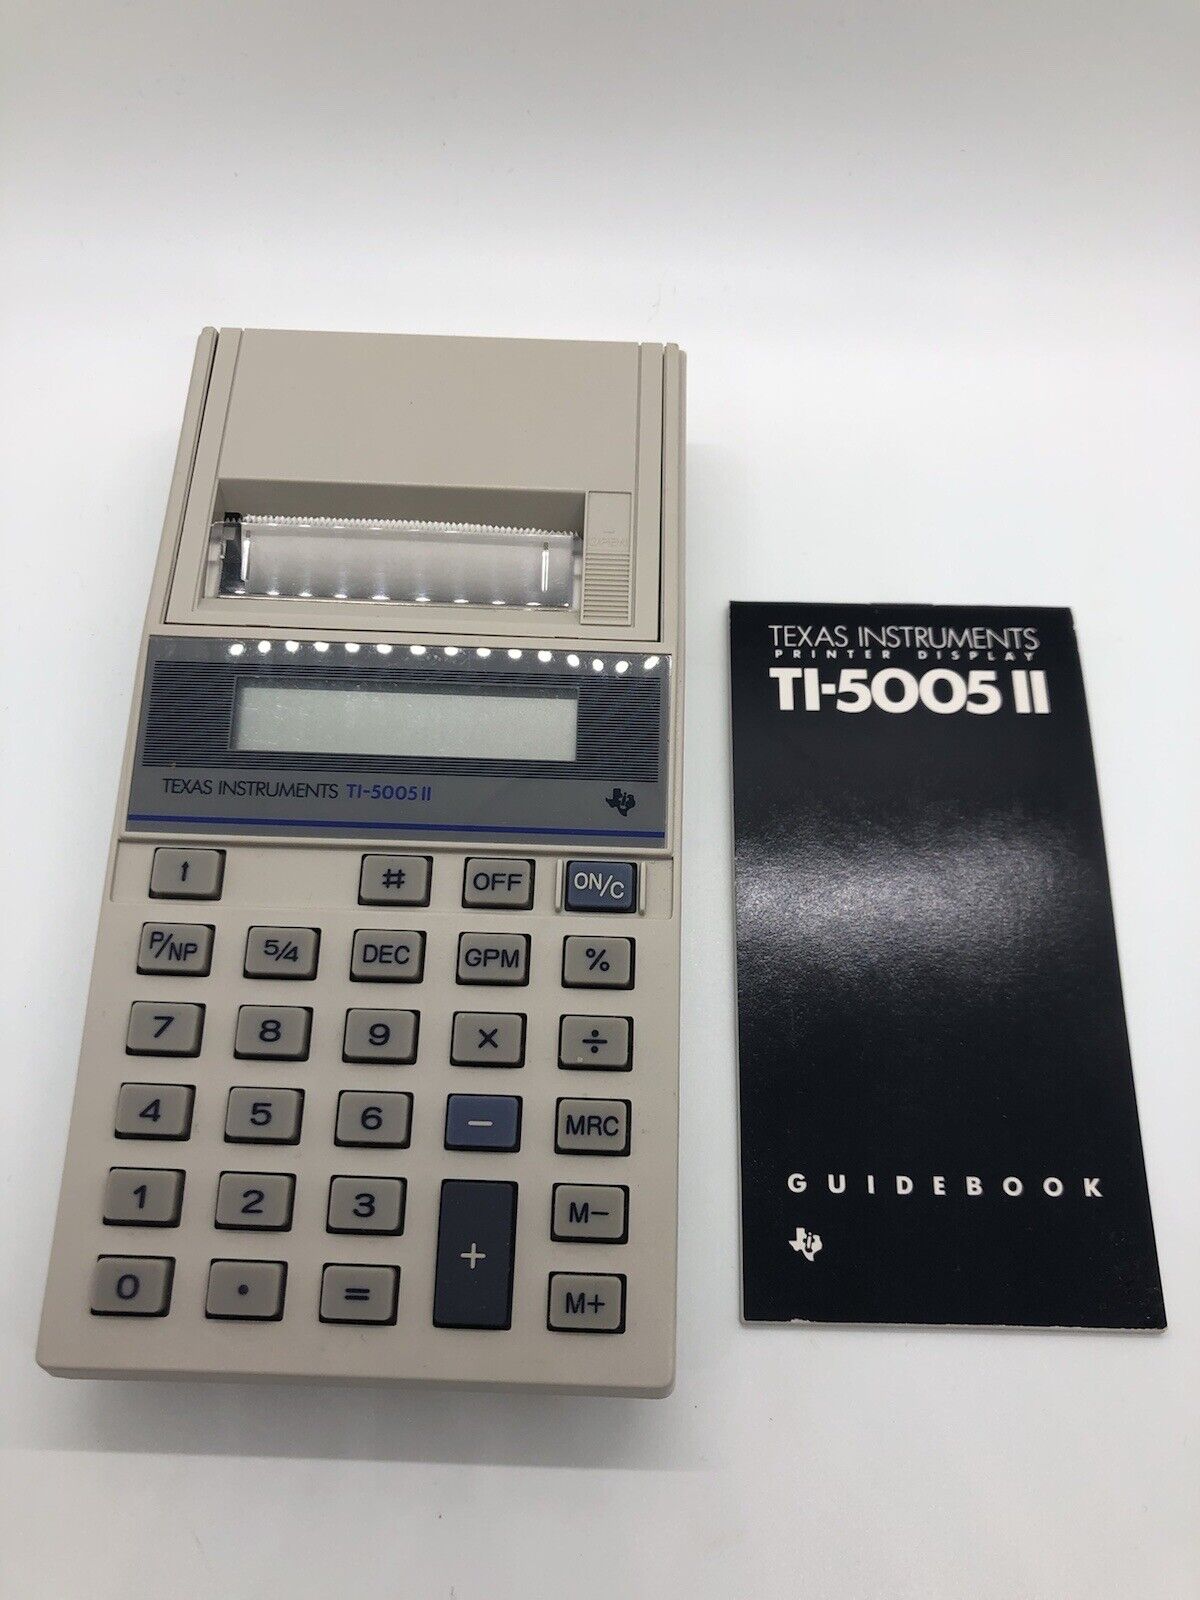 Texas Instruments TI-5005 II Calculator Vintage